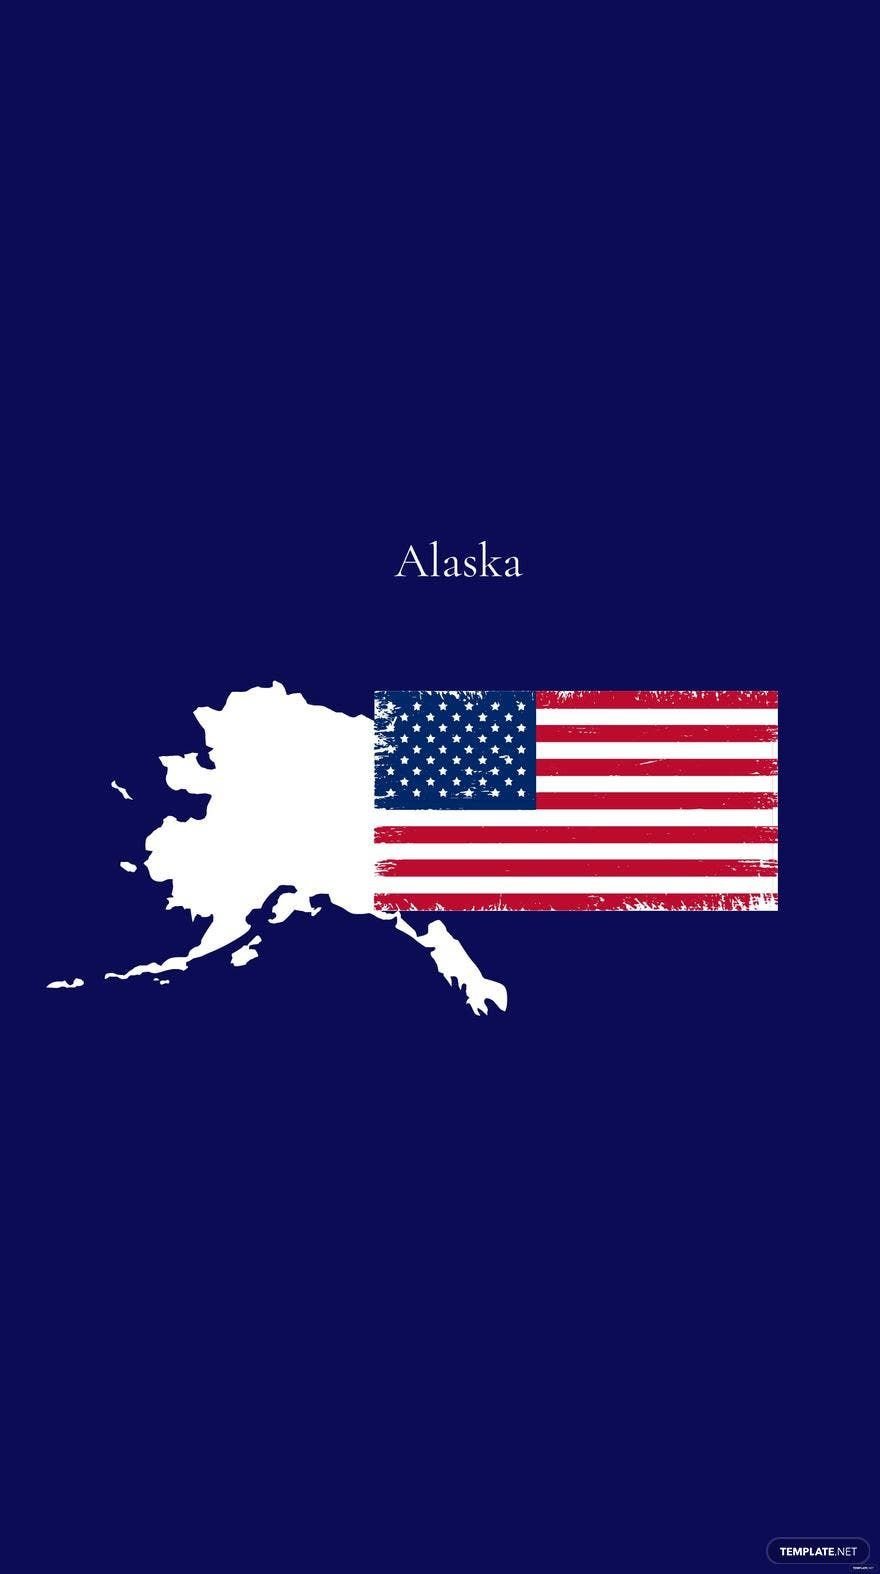 Alaska Day iPhone Background